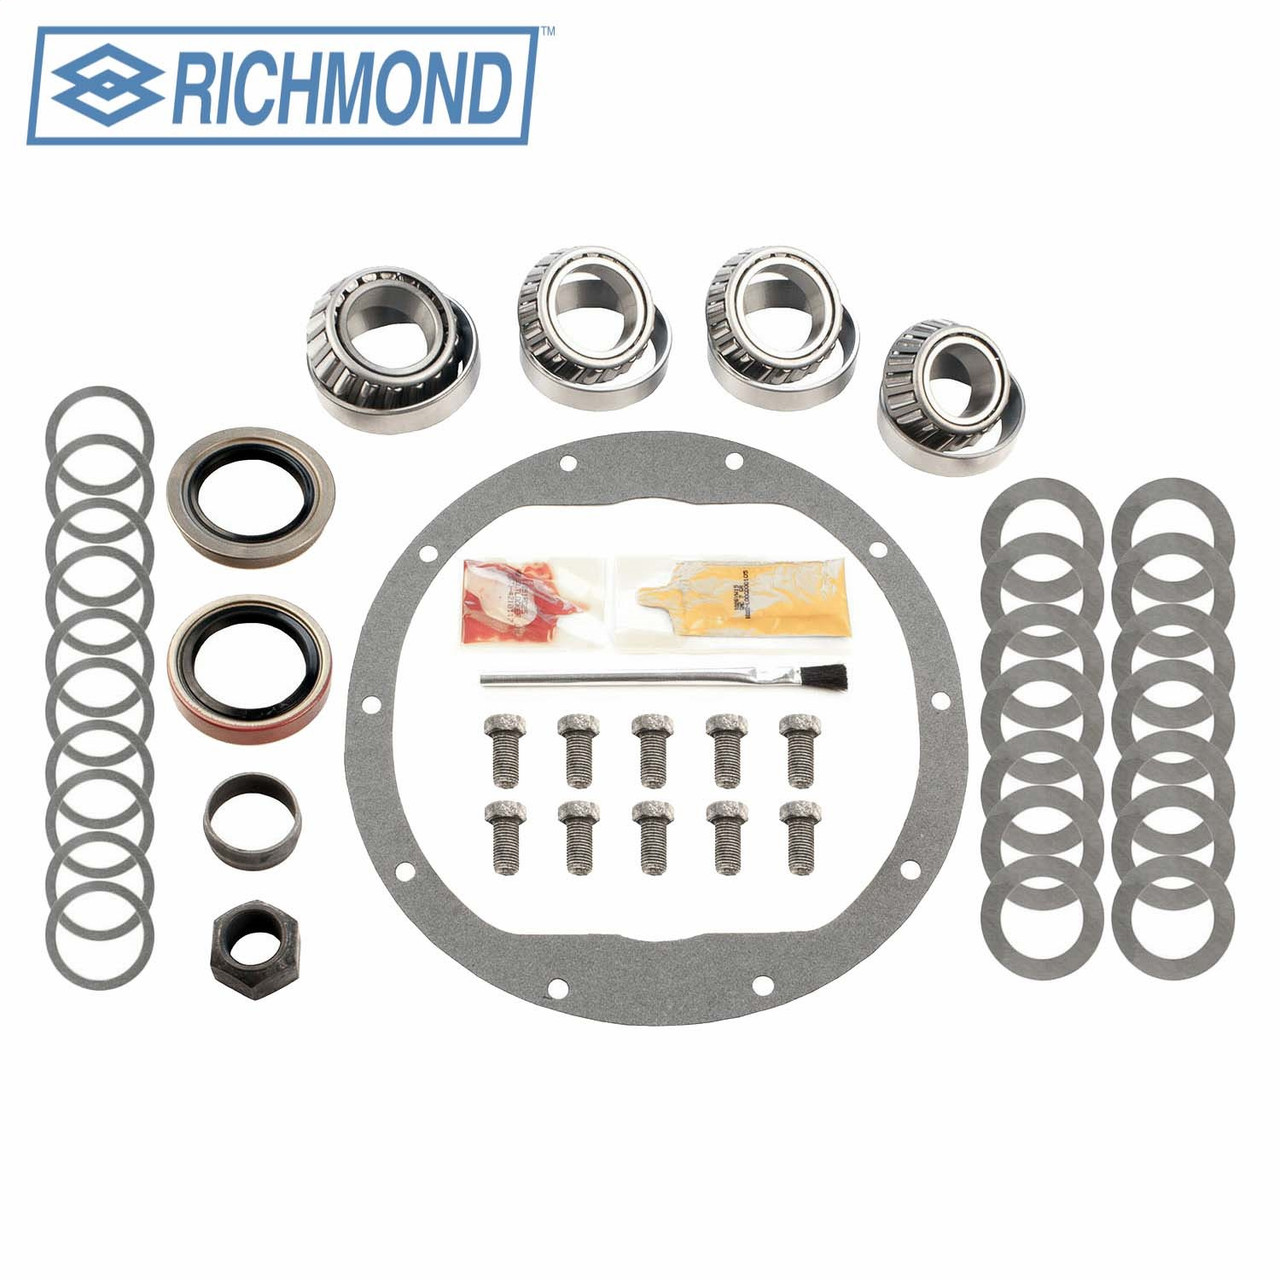 Richmond Gear 83-1021-1 Differential Bearing Kit